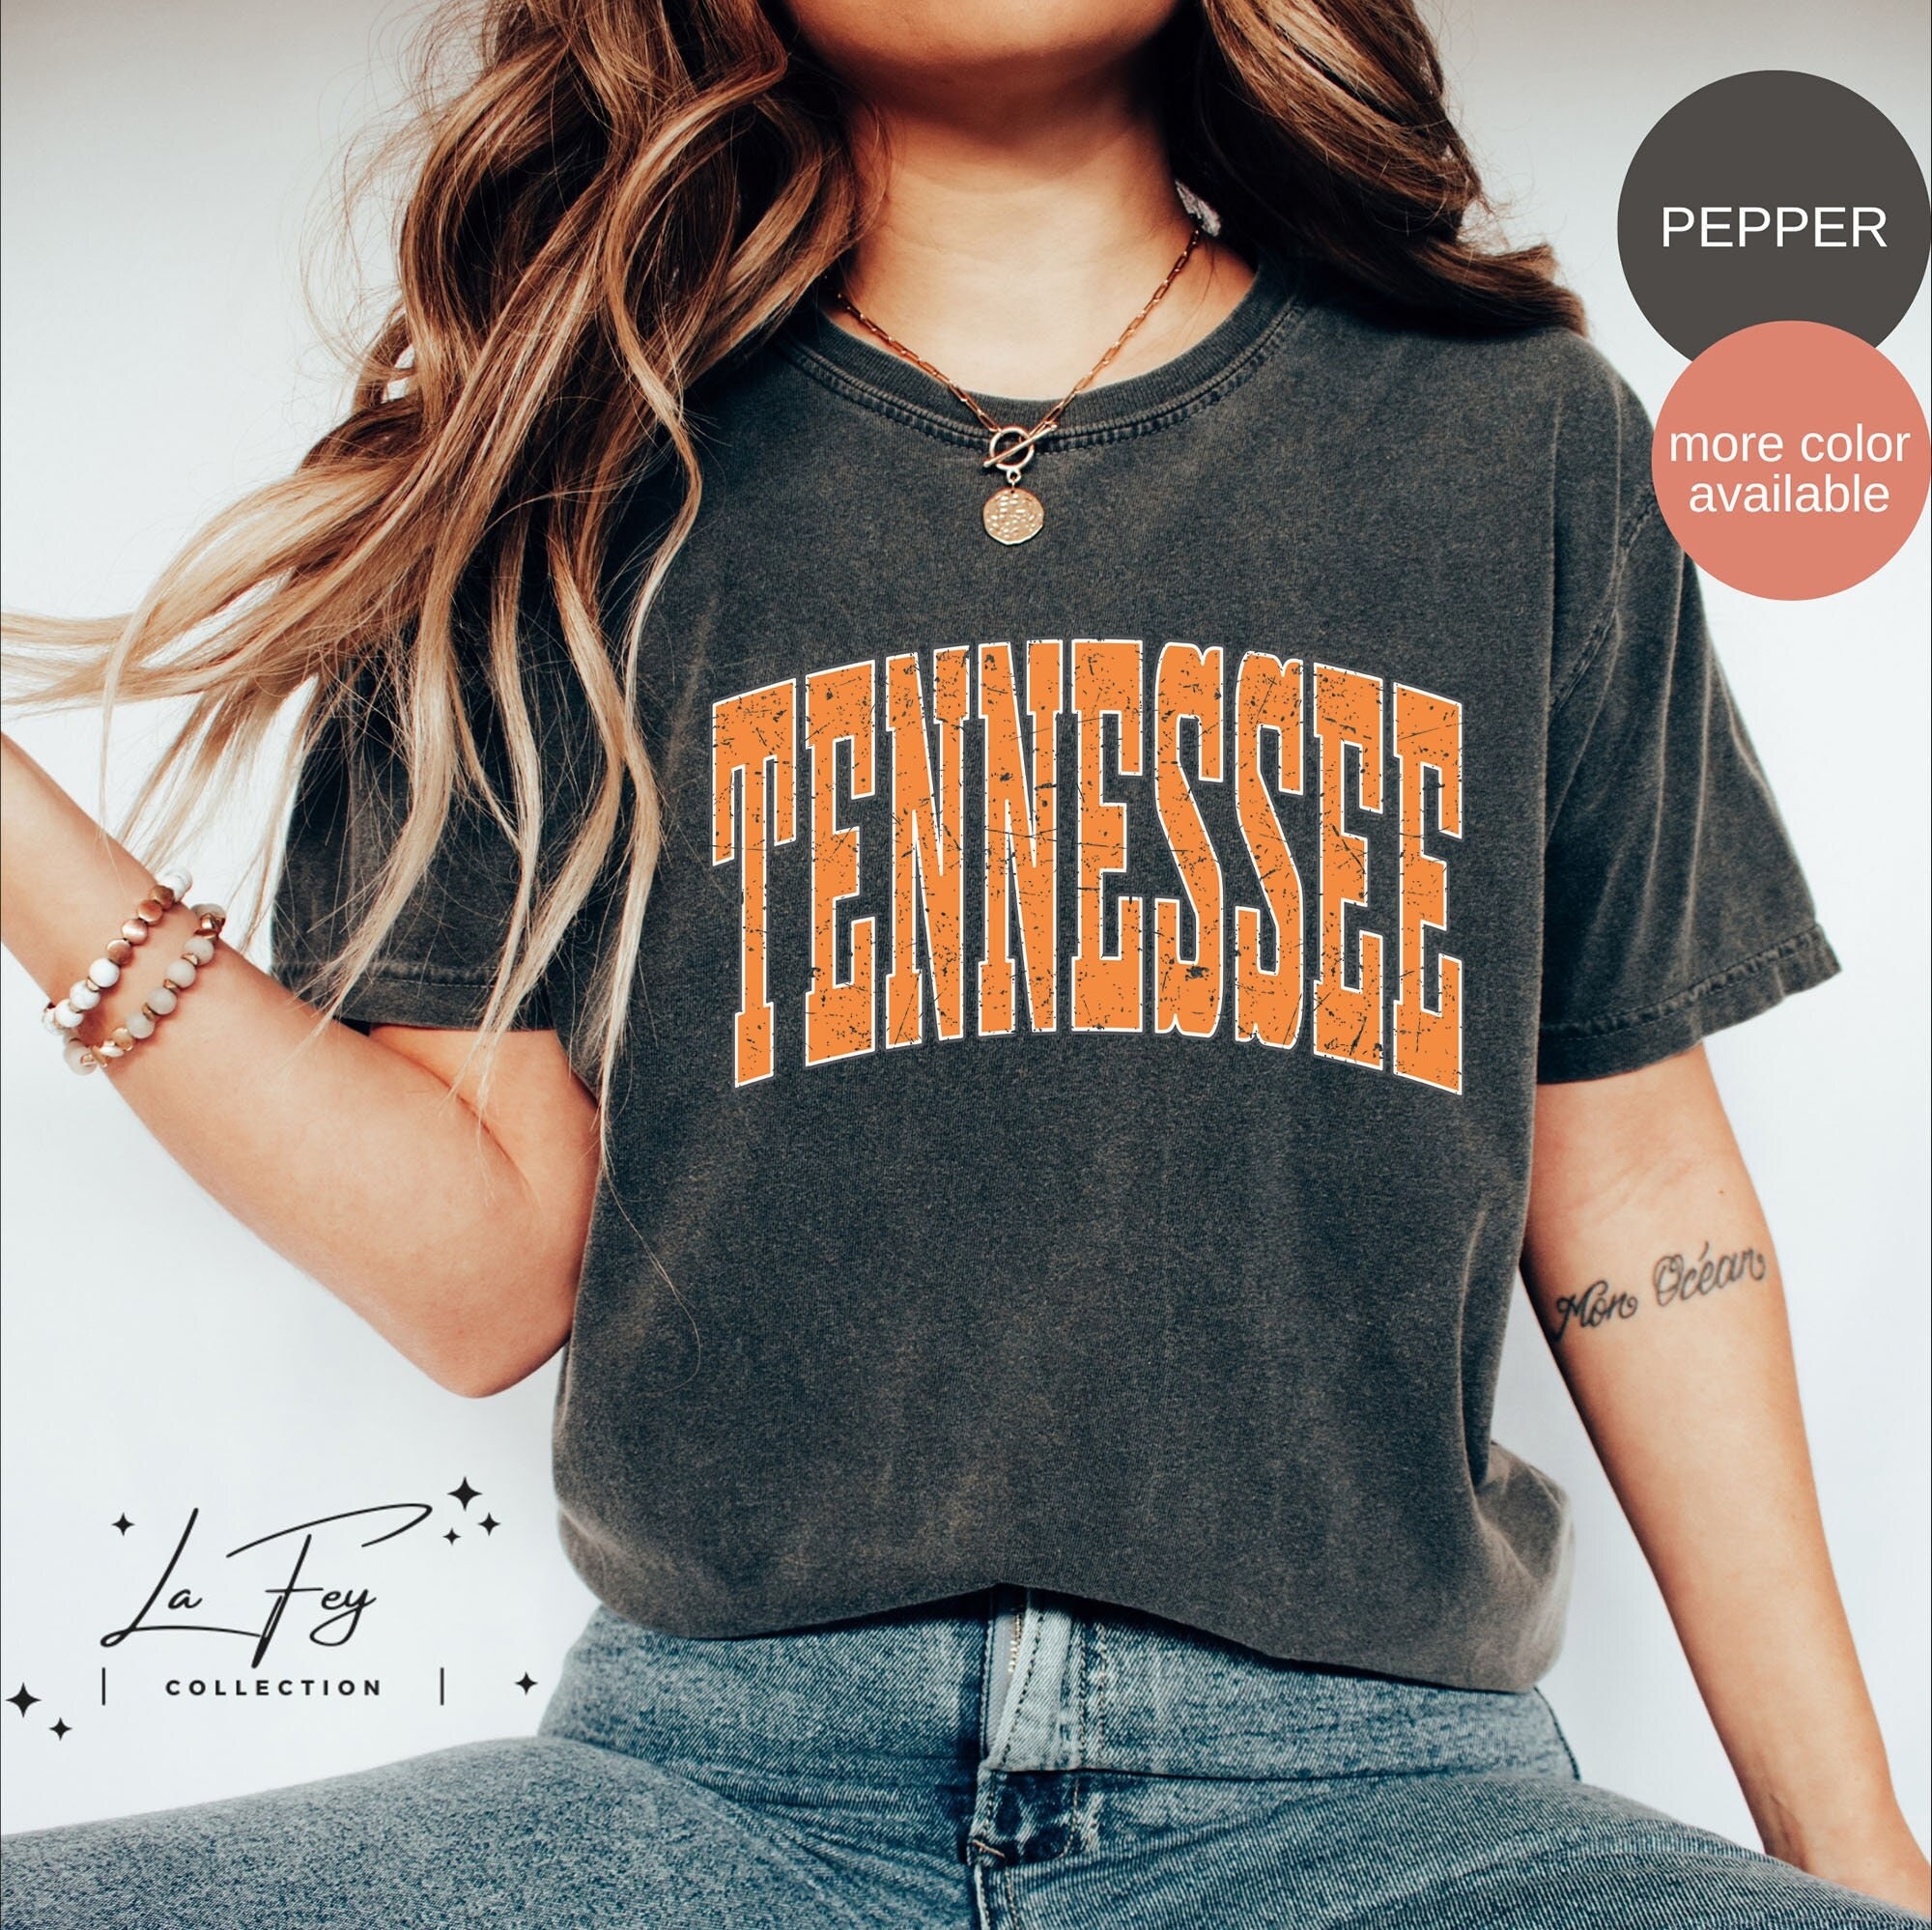 Mens Tennessee Tshirt Funny Buck Fama Team Color Orange and White TN  Football Long Sleeve T-shirt Graphic Tee-Sports Grey-medium 